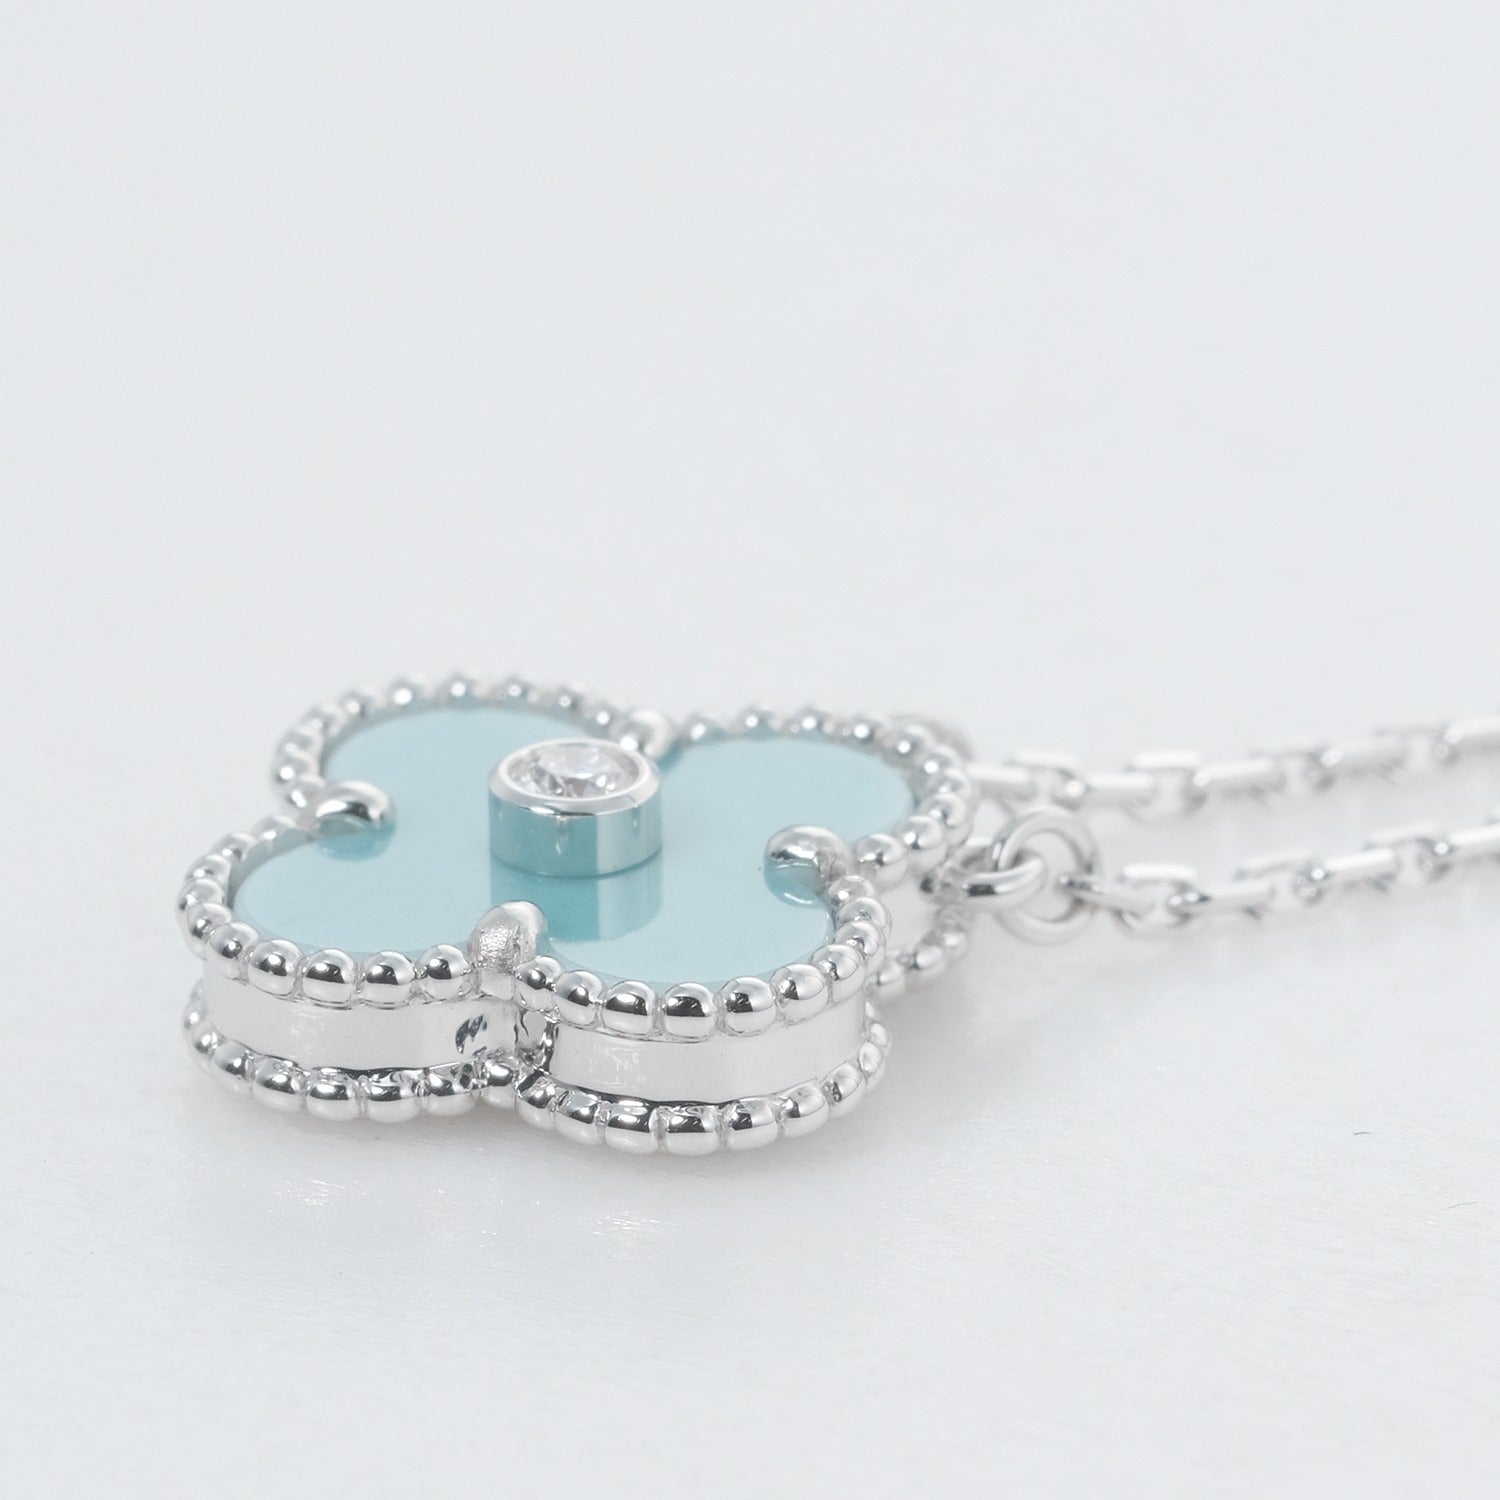 Van Cleef & Arpels vint Alhambra necklace 2022 holid VCARP9RU00 K18 WG white g diamond  7.01g  quality clay